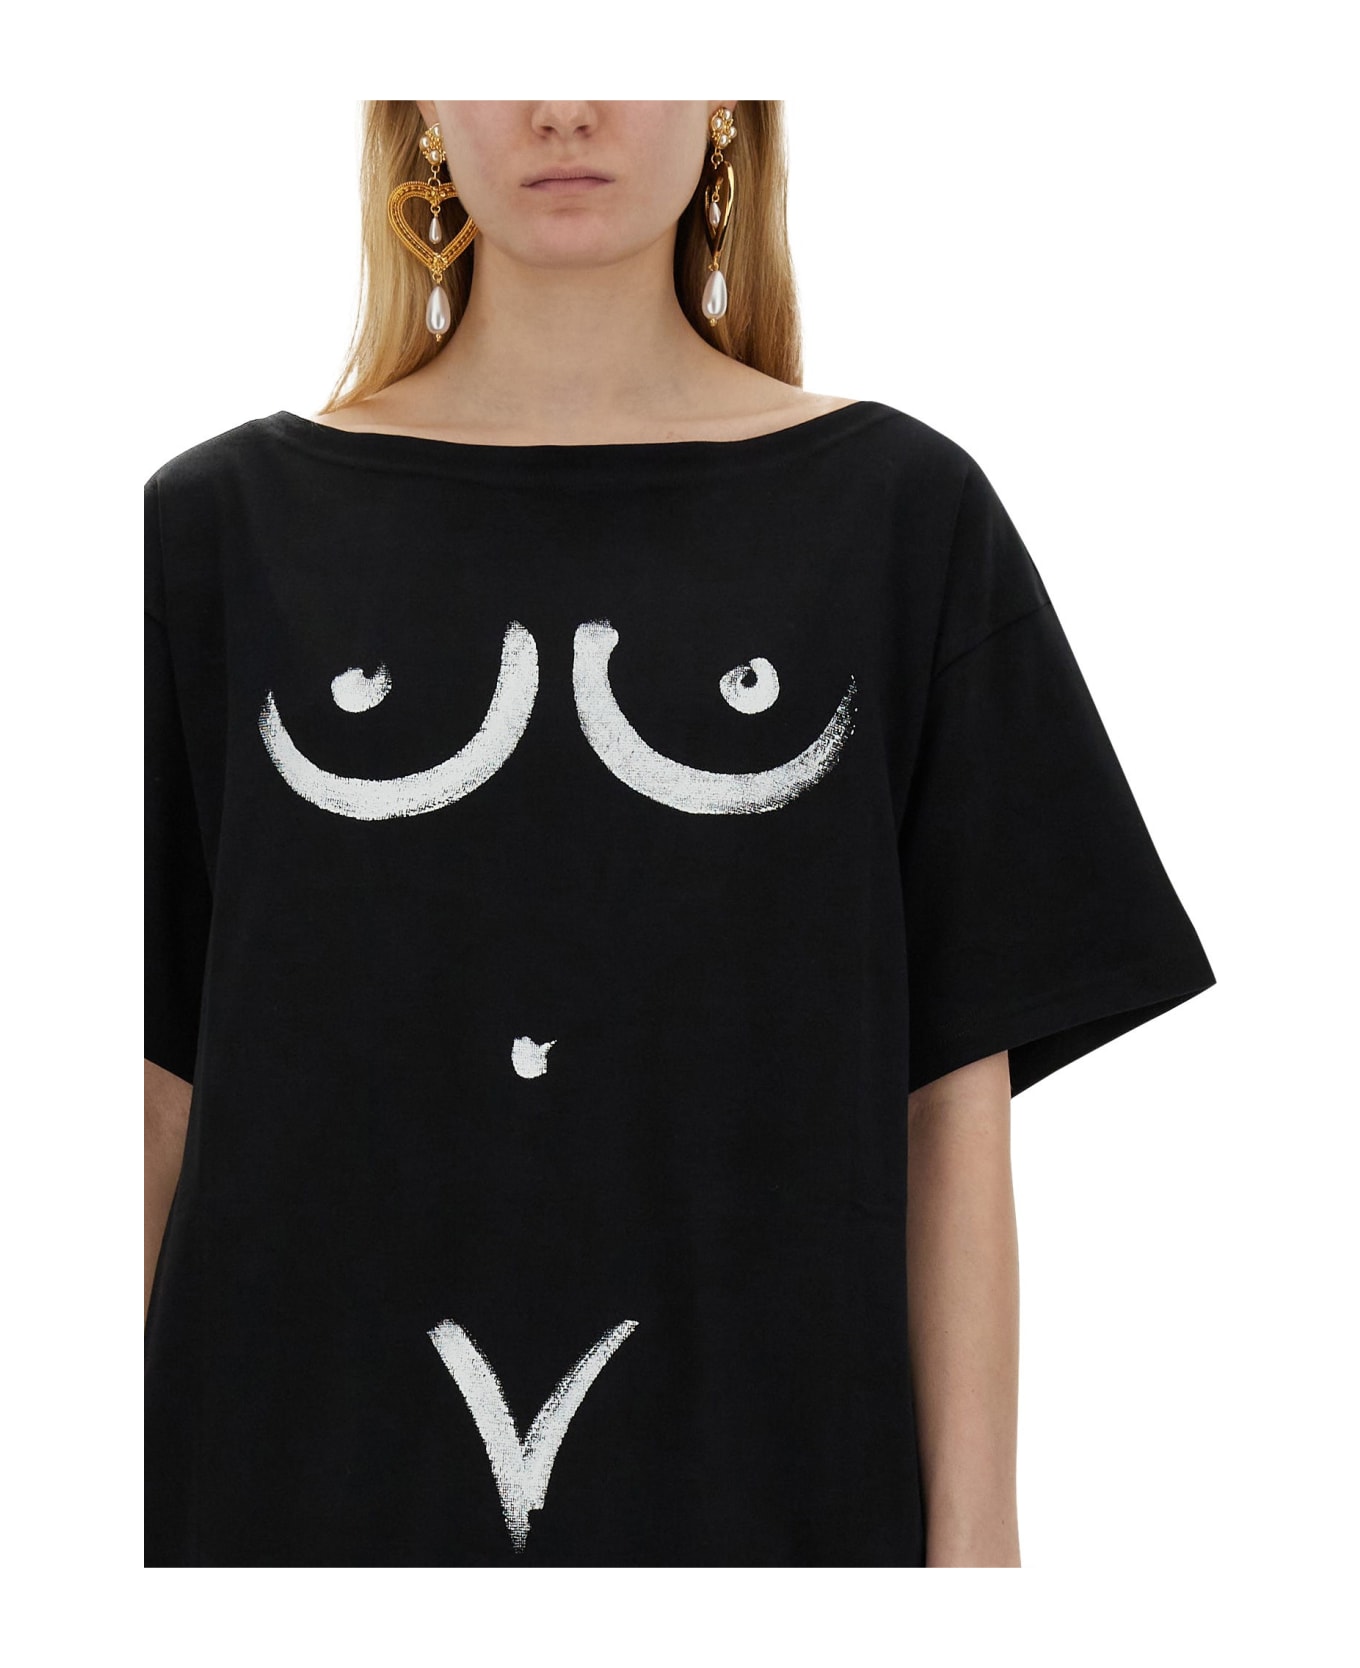 Moschino Interlock Body Print T-shirt - Black Tシャツ